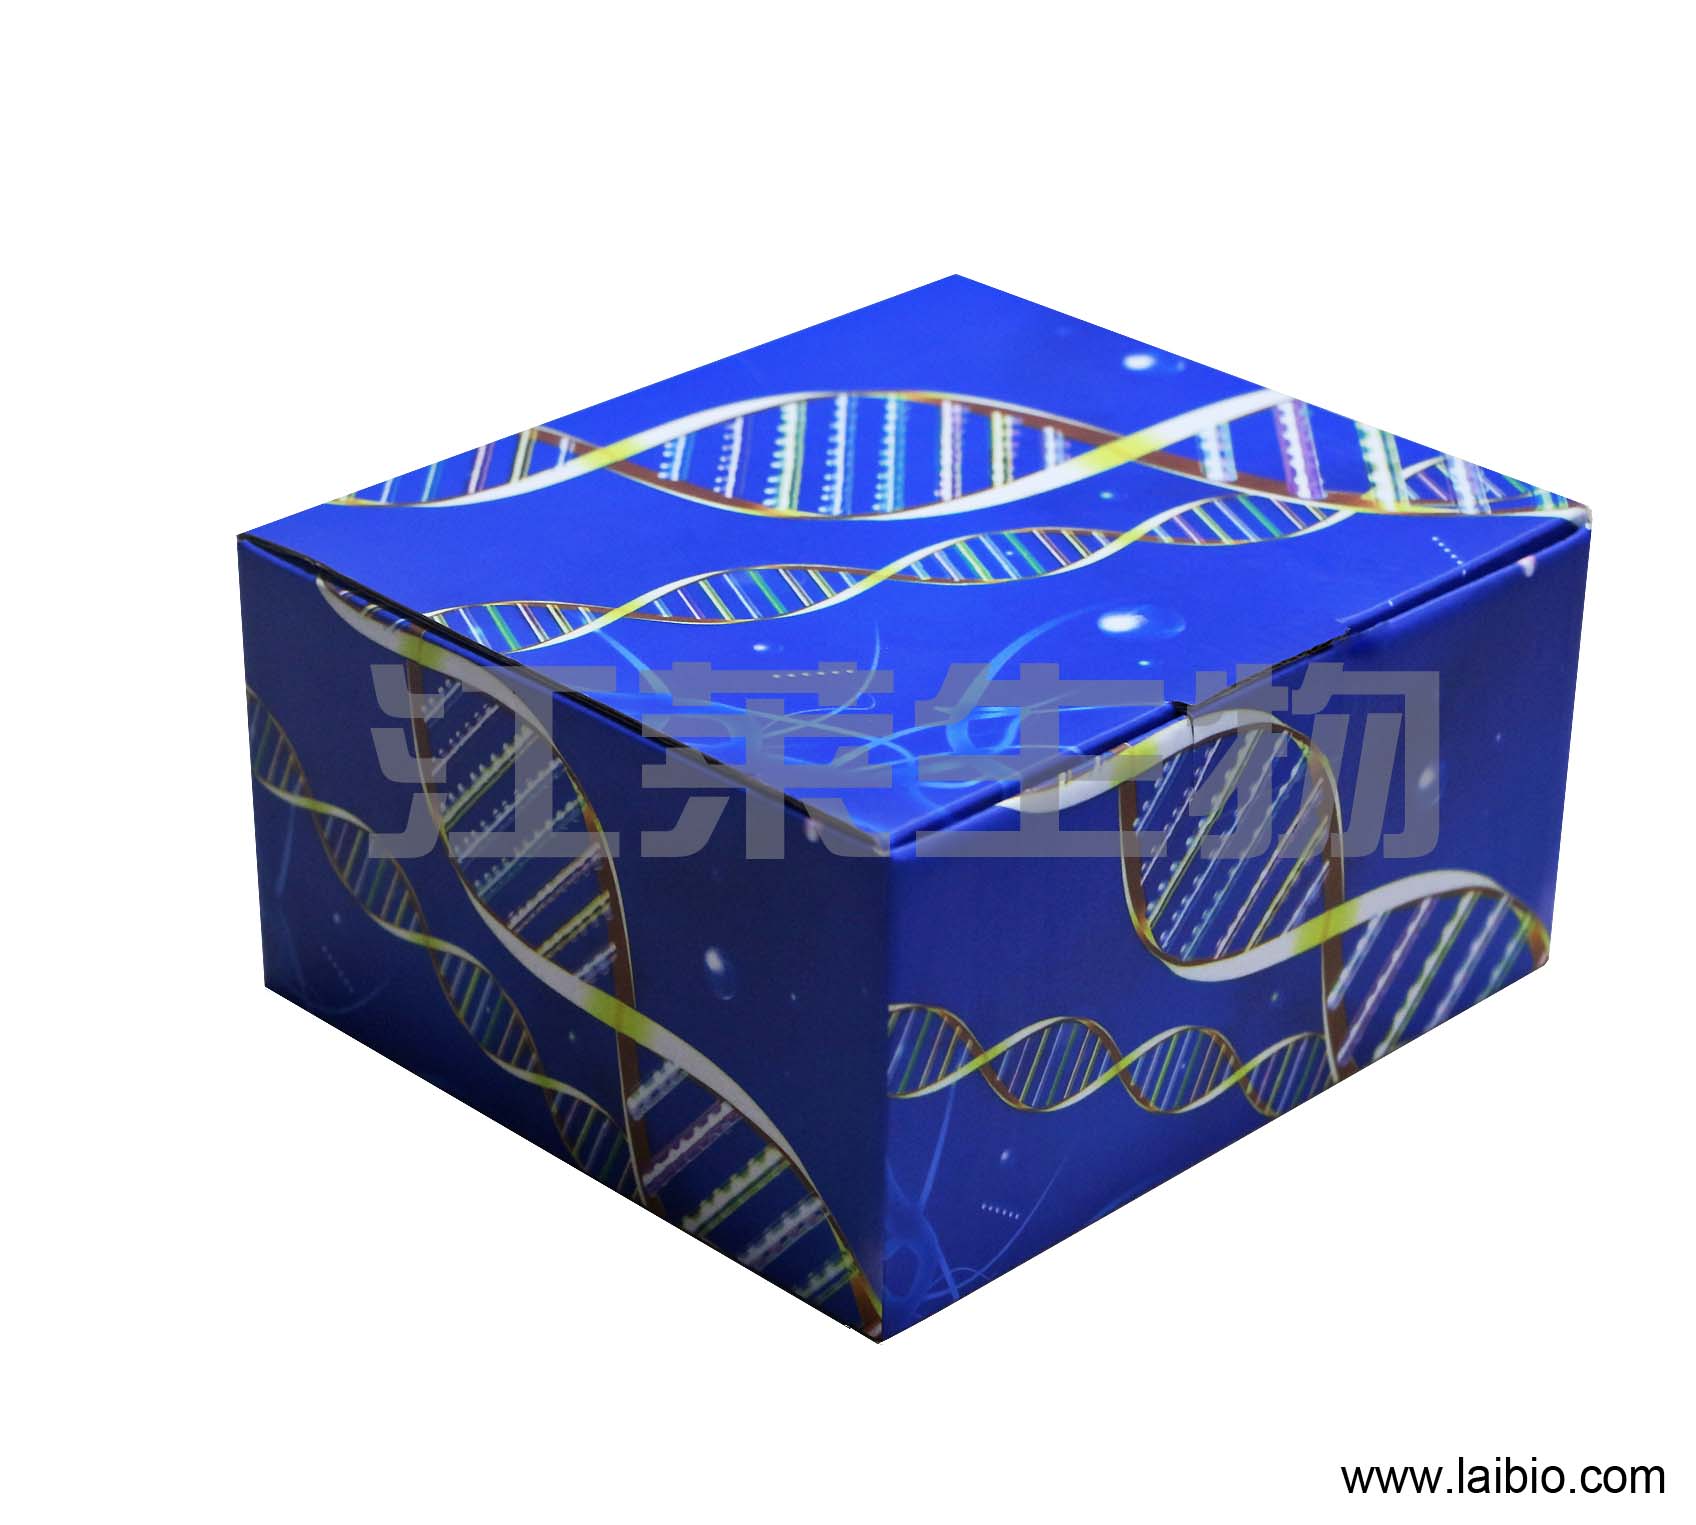 人抗鼠抗体(HAMA)ELISA试剂盒